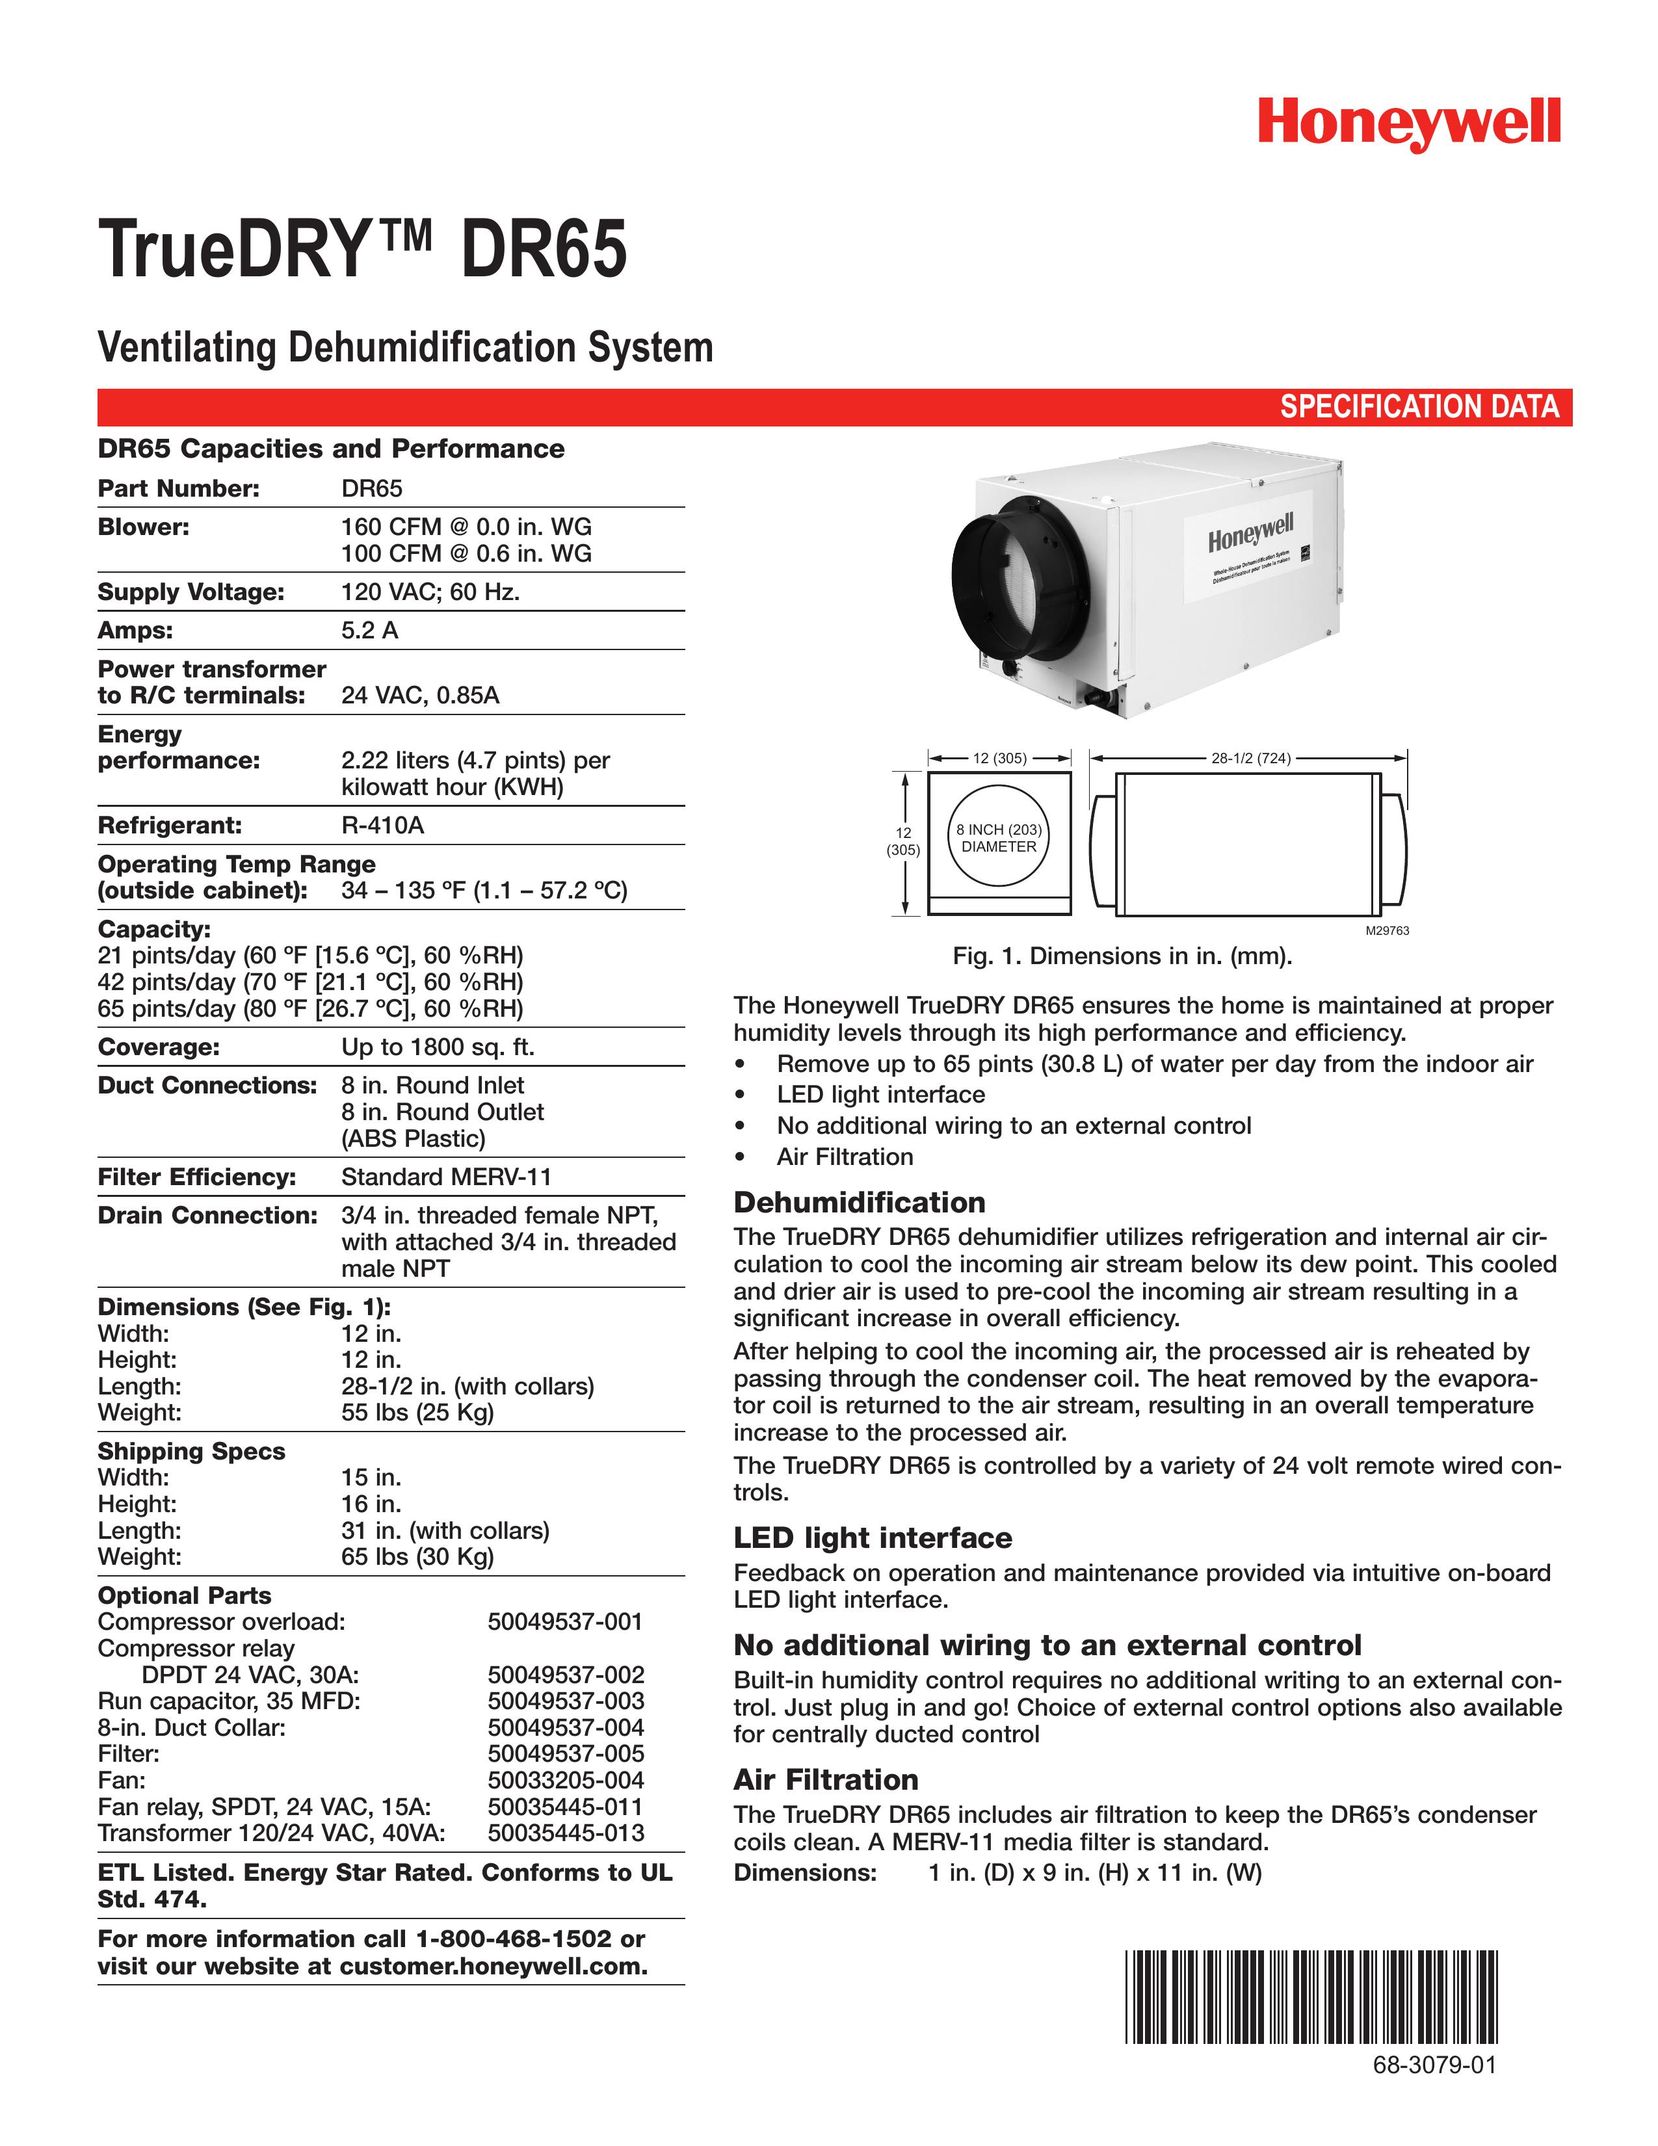 Honeywell DR65 Dehumidifier User Manual